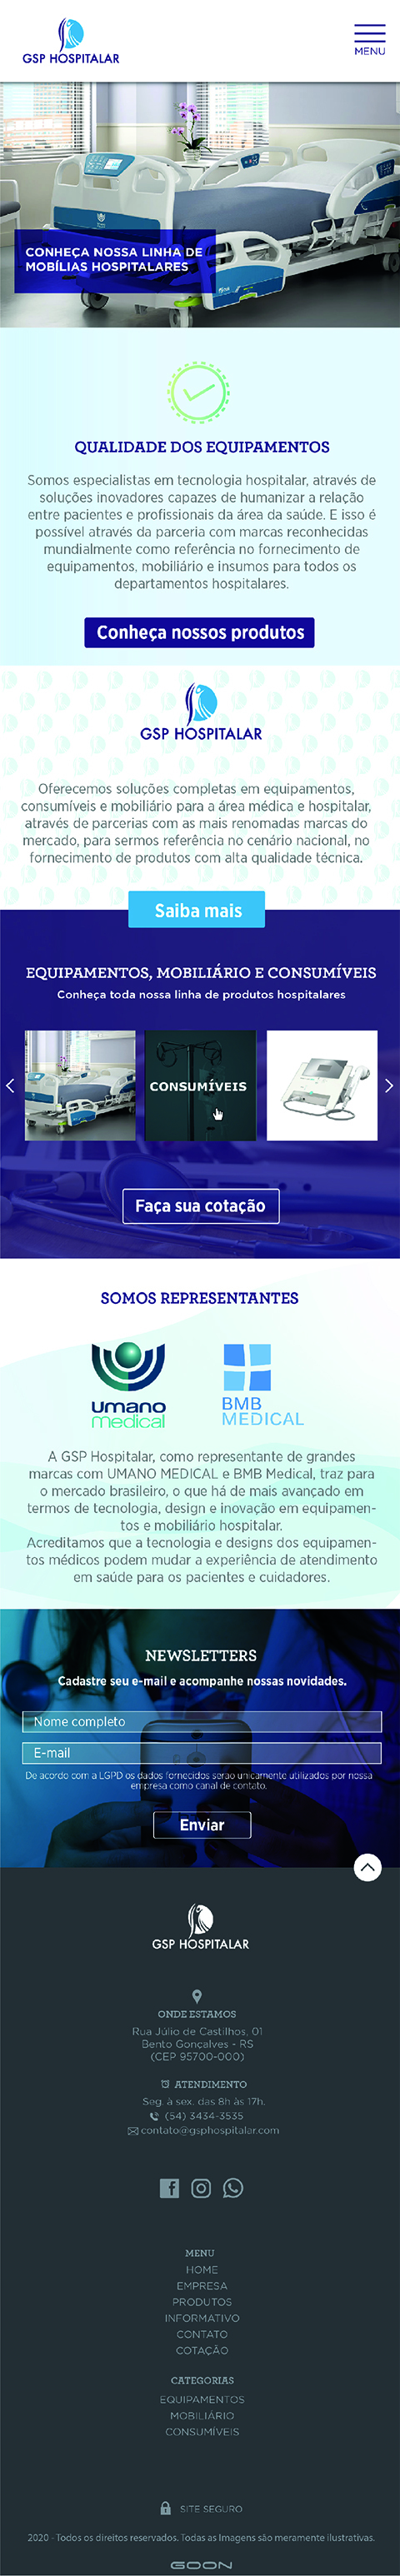 GSP Hospitalar layout mobile version